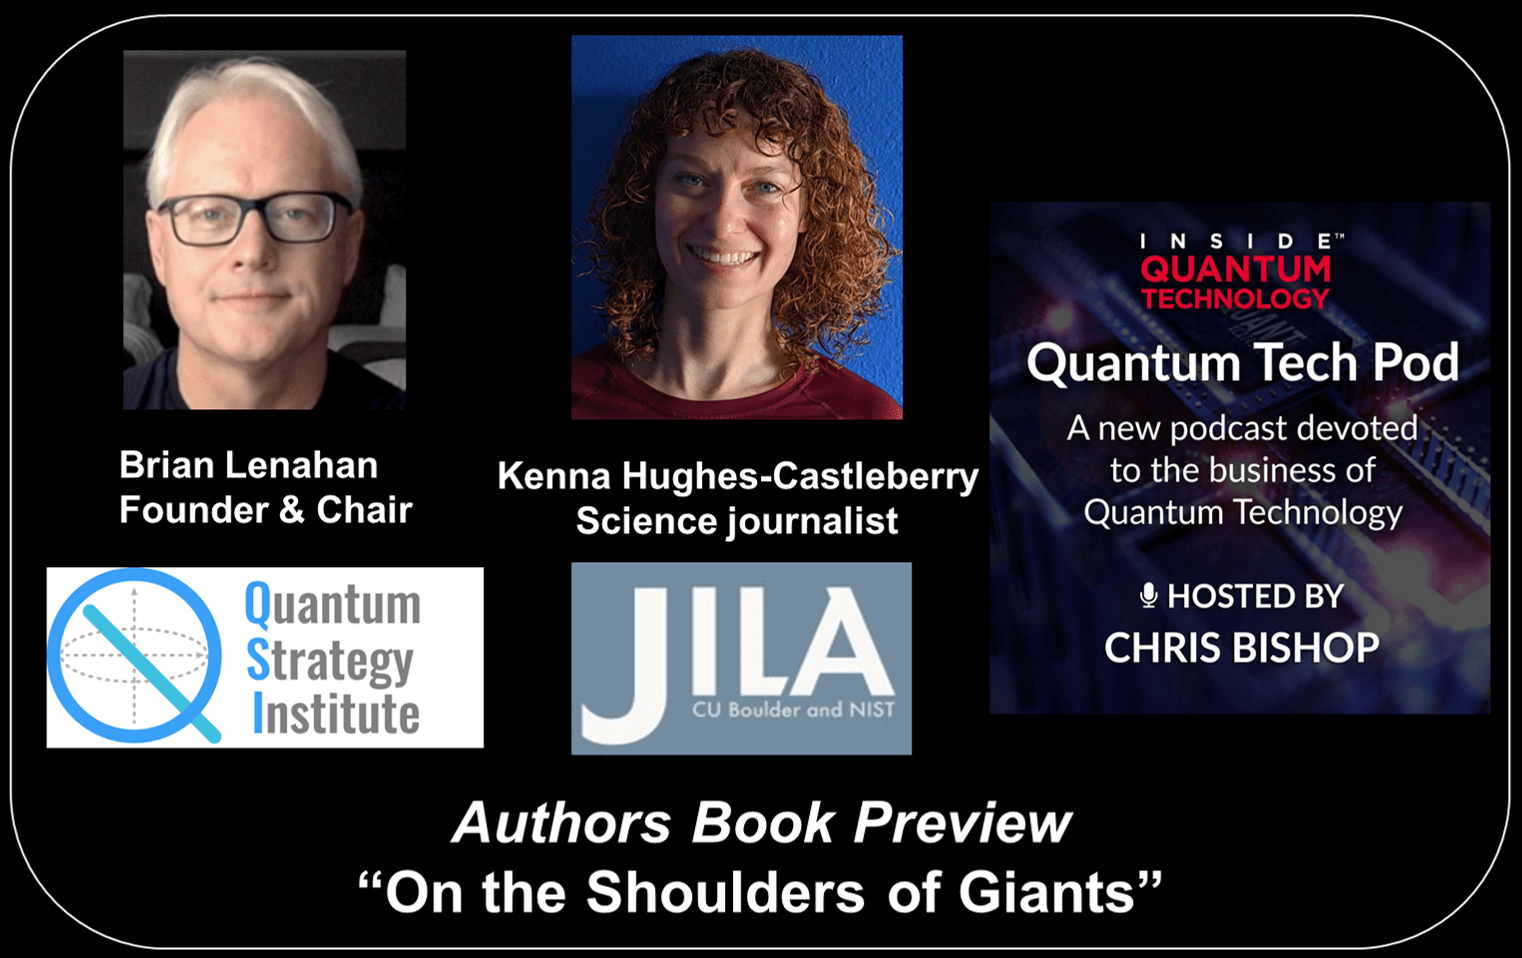 Quantum Tech Pod Episode 47: Brian Lenahan & Kenna Hughes-Castleberry が彼らの著書「On the Shoulders of Giants」について語る